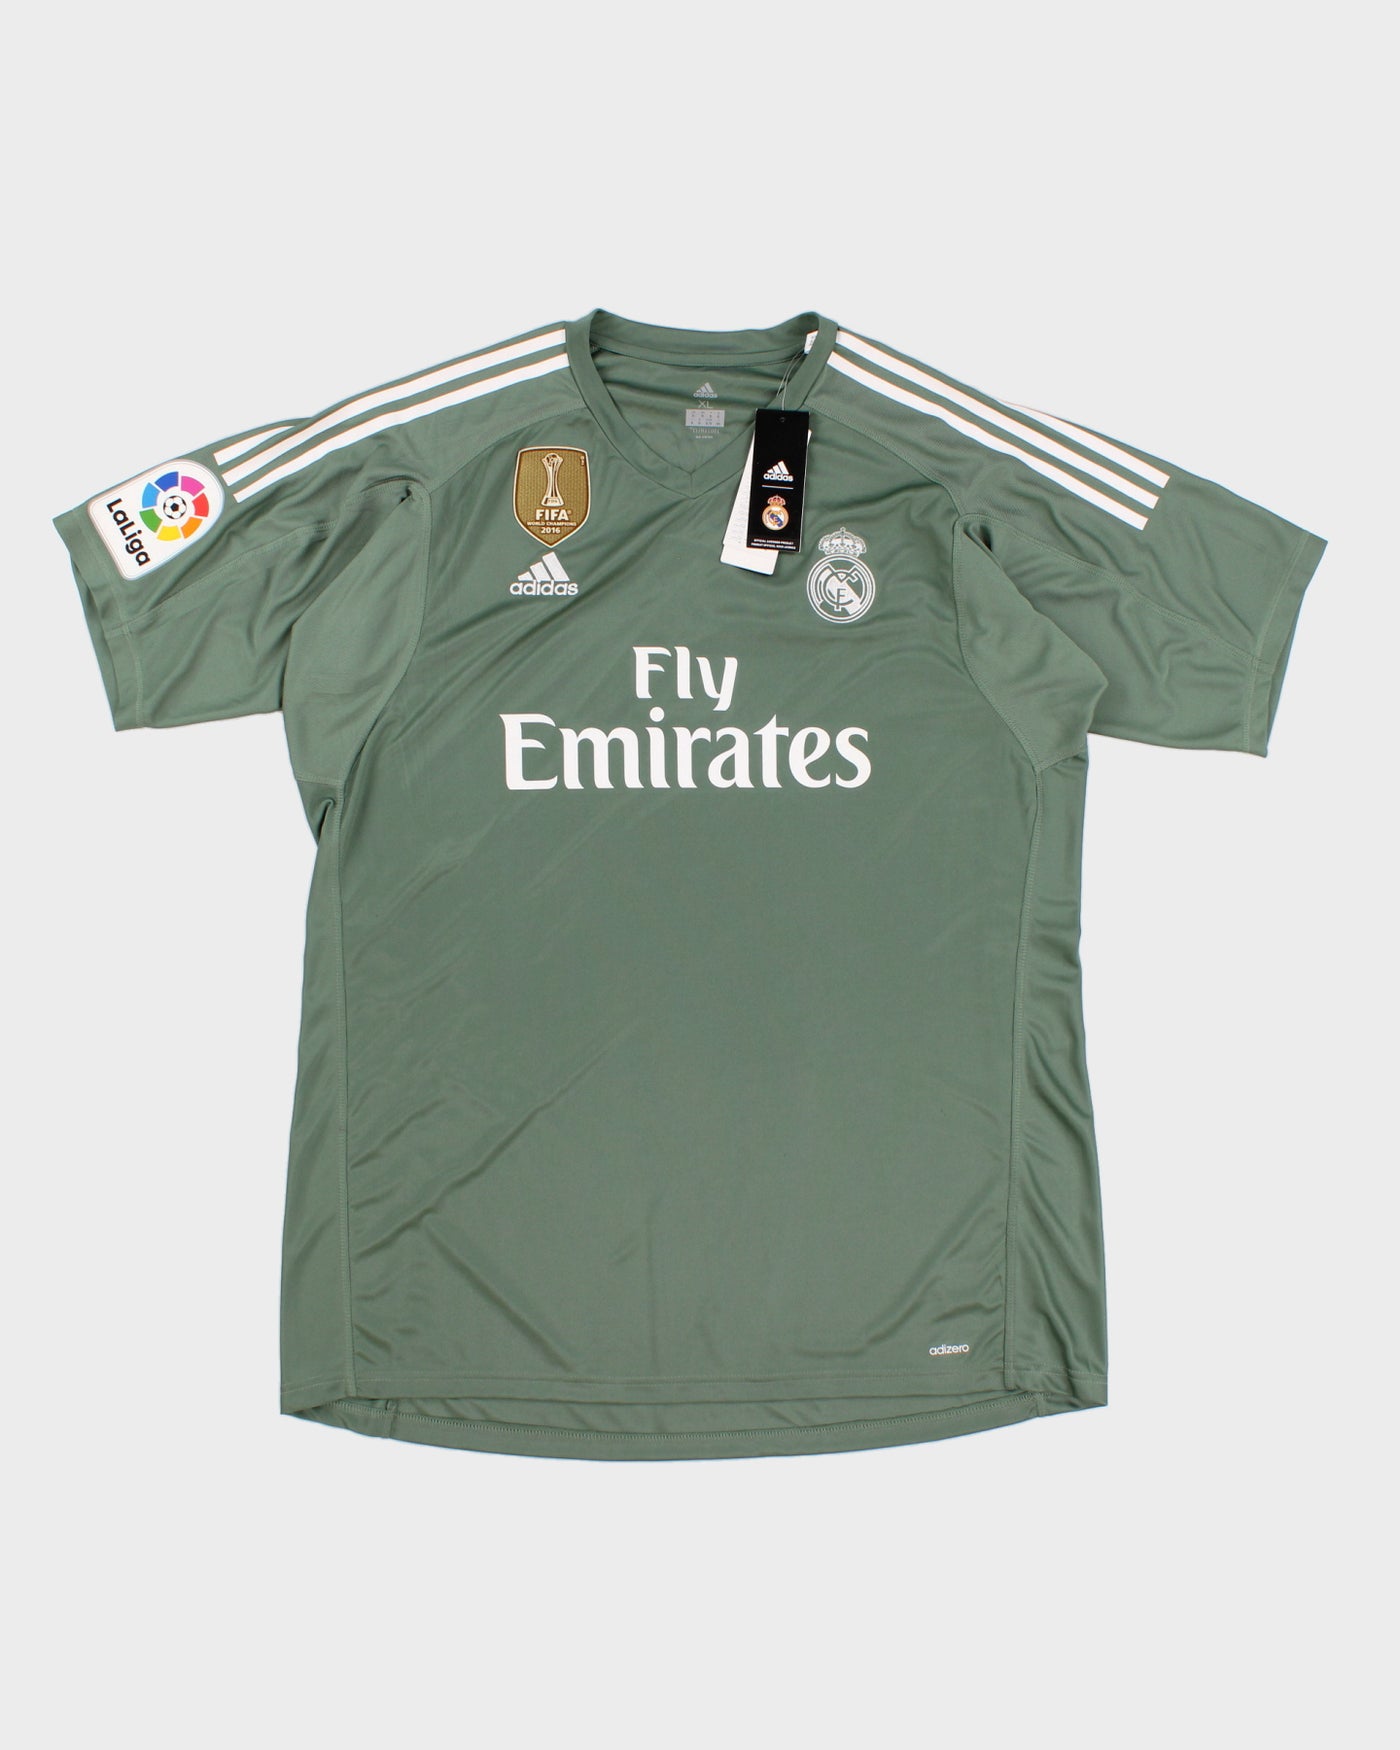 Real Madrid Adidas Keylor Navas #1 Football Shirt